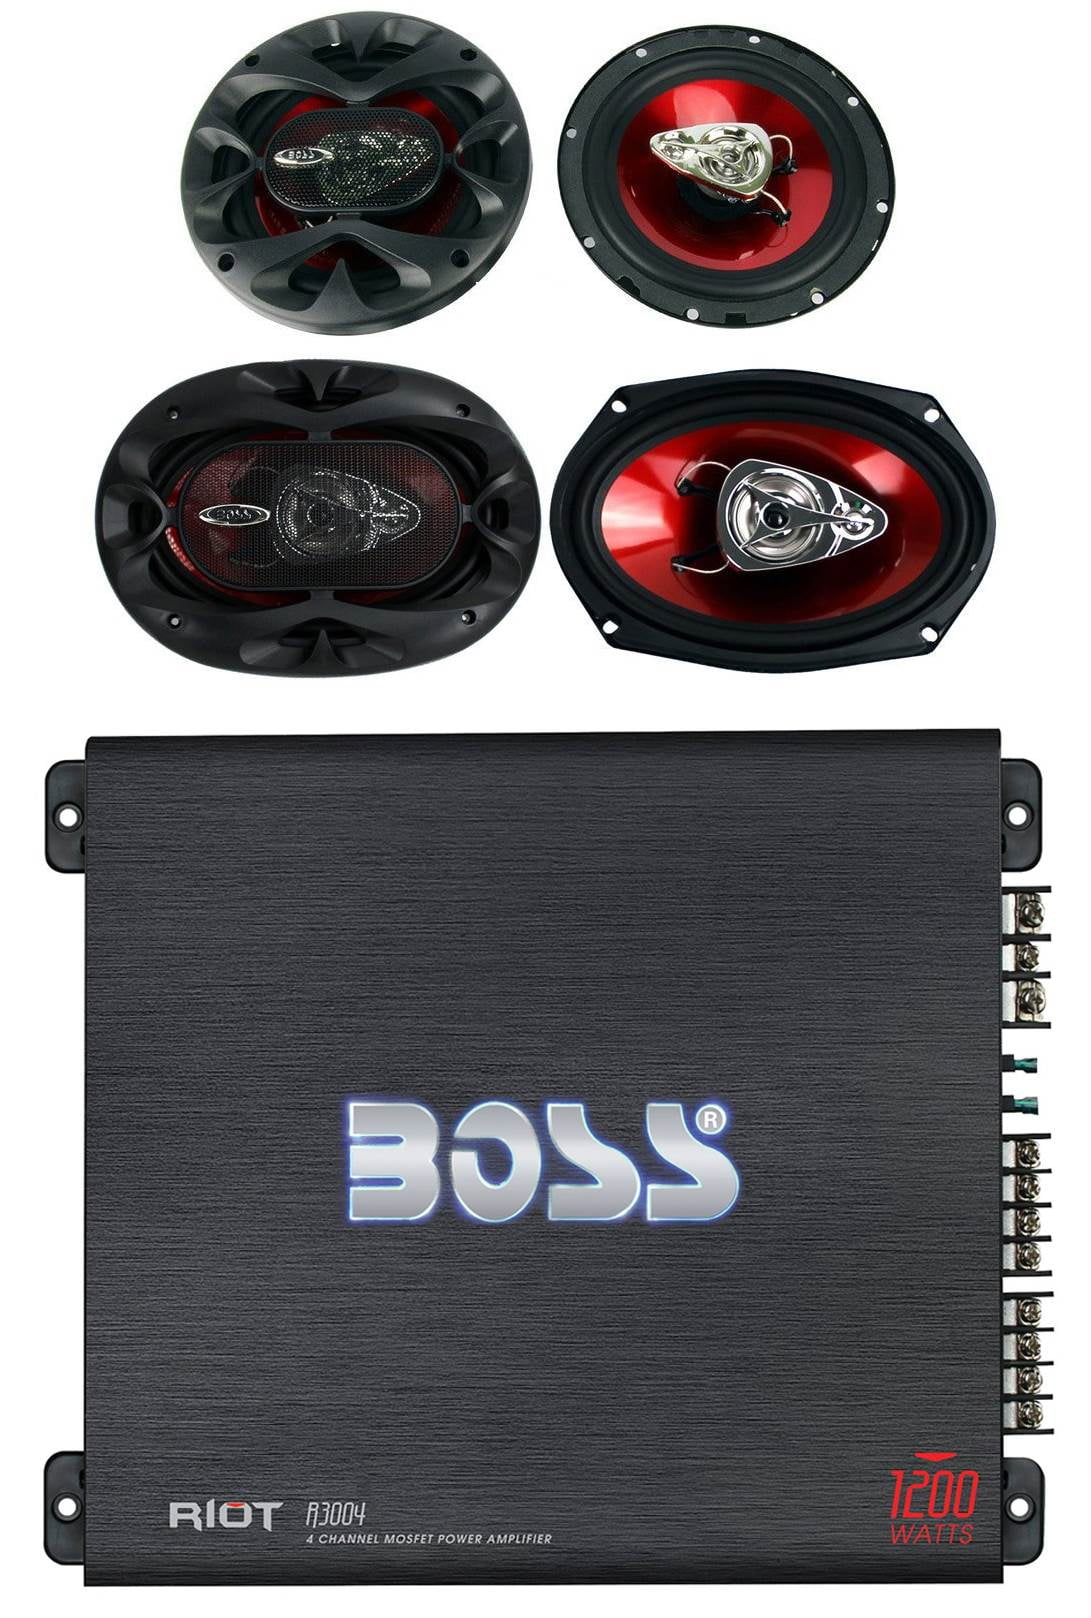 2 Boss CH6530 6.5" 300W R1004 400W Amp 2 CH6930 6x9" 400W Car Audio Speakers 